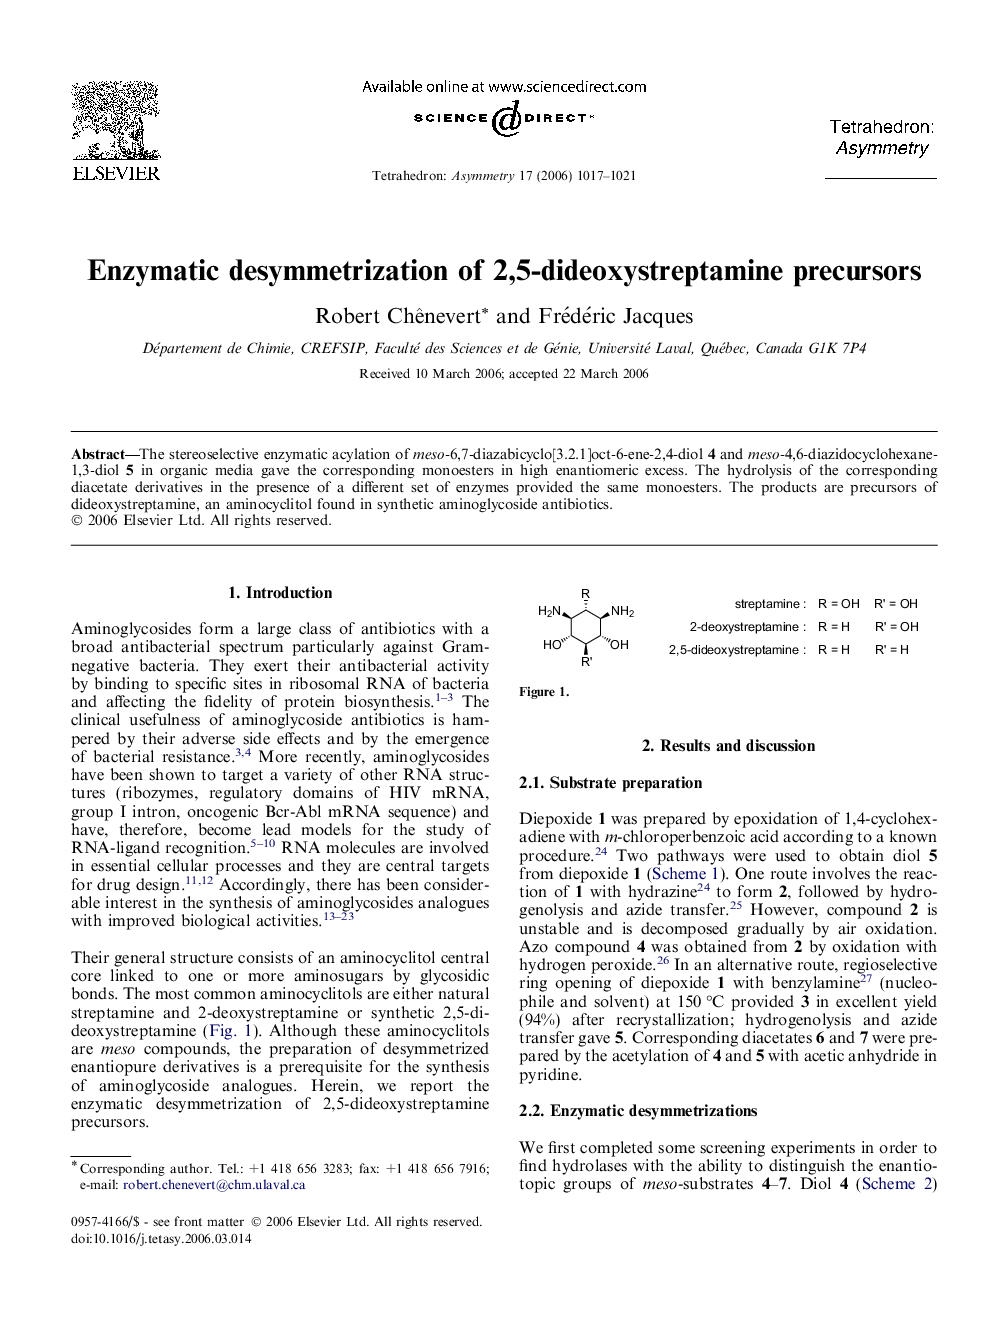 Enzymatic desymmetrization of 2,5-dideoxystreptamine precursors